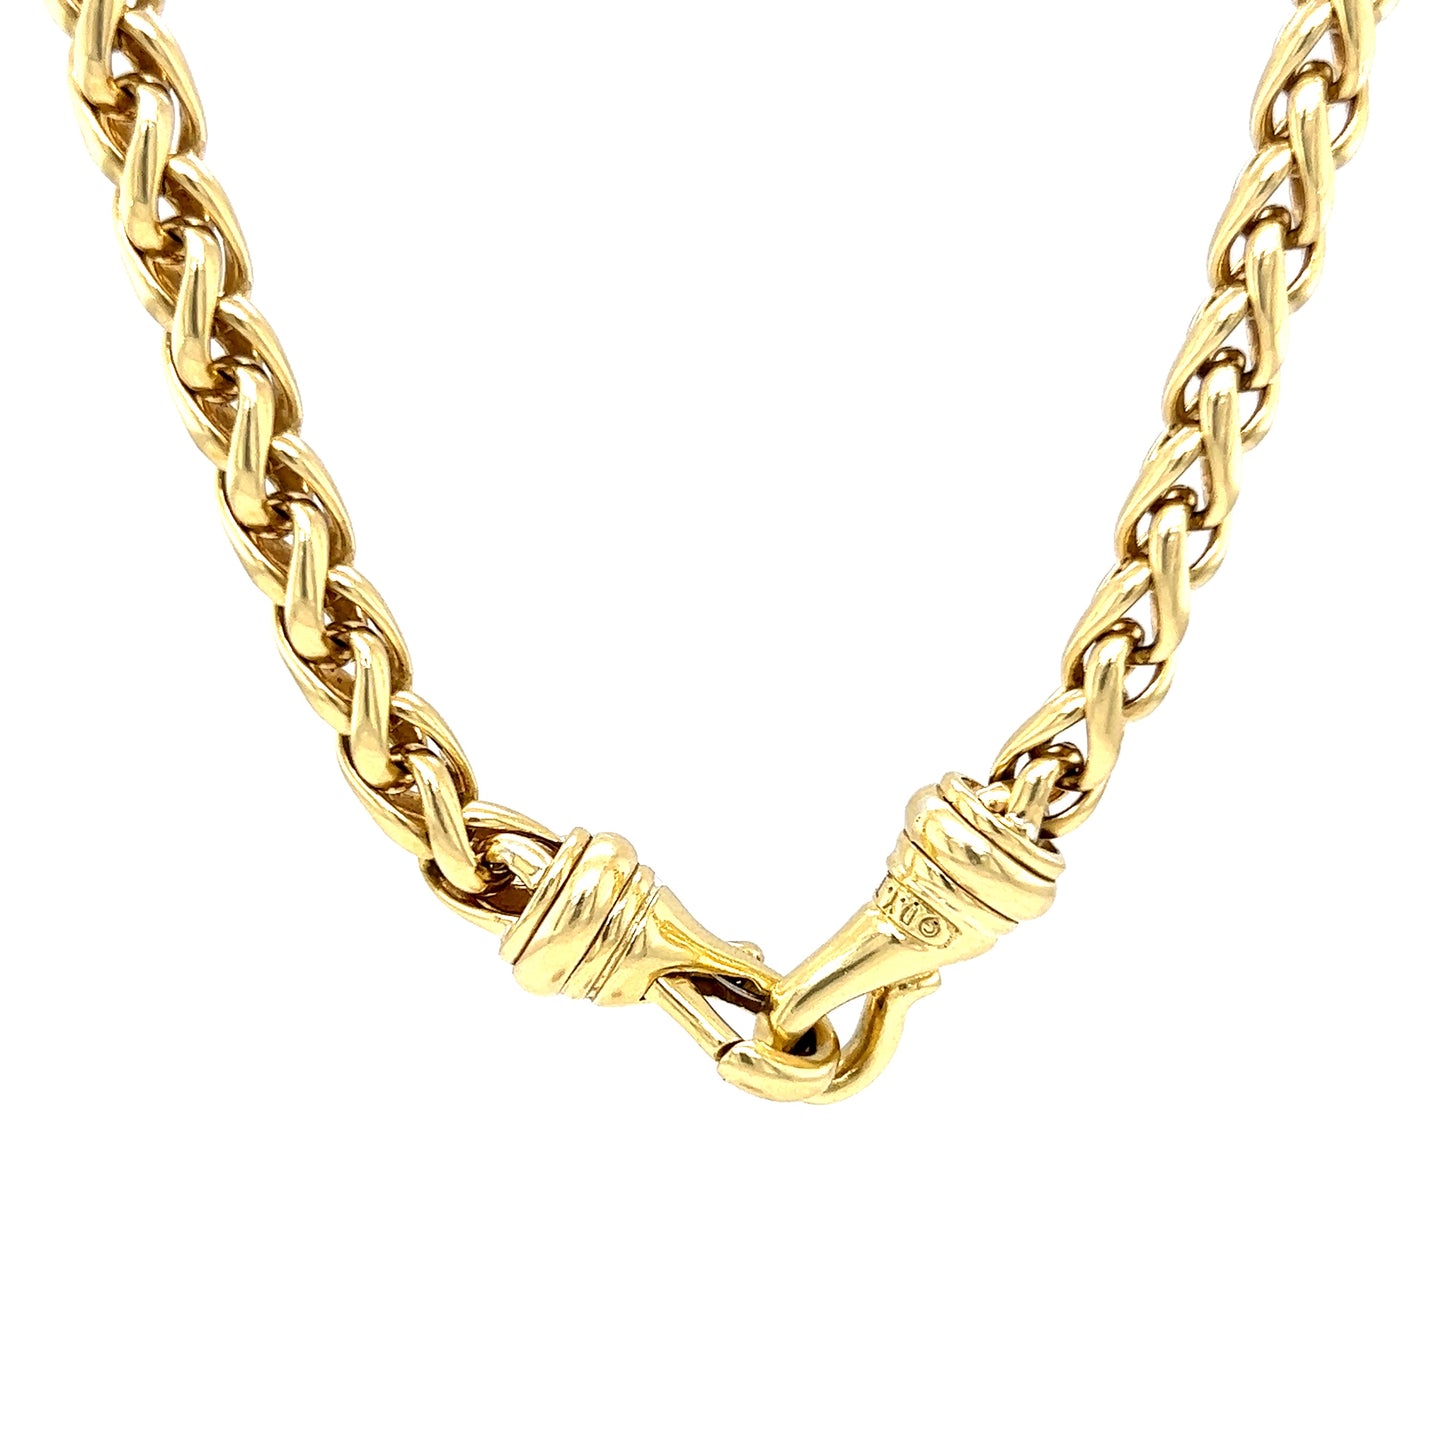 Yurman 6mm Wheat Chain Necklace in 18k Yellow Gold